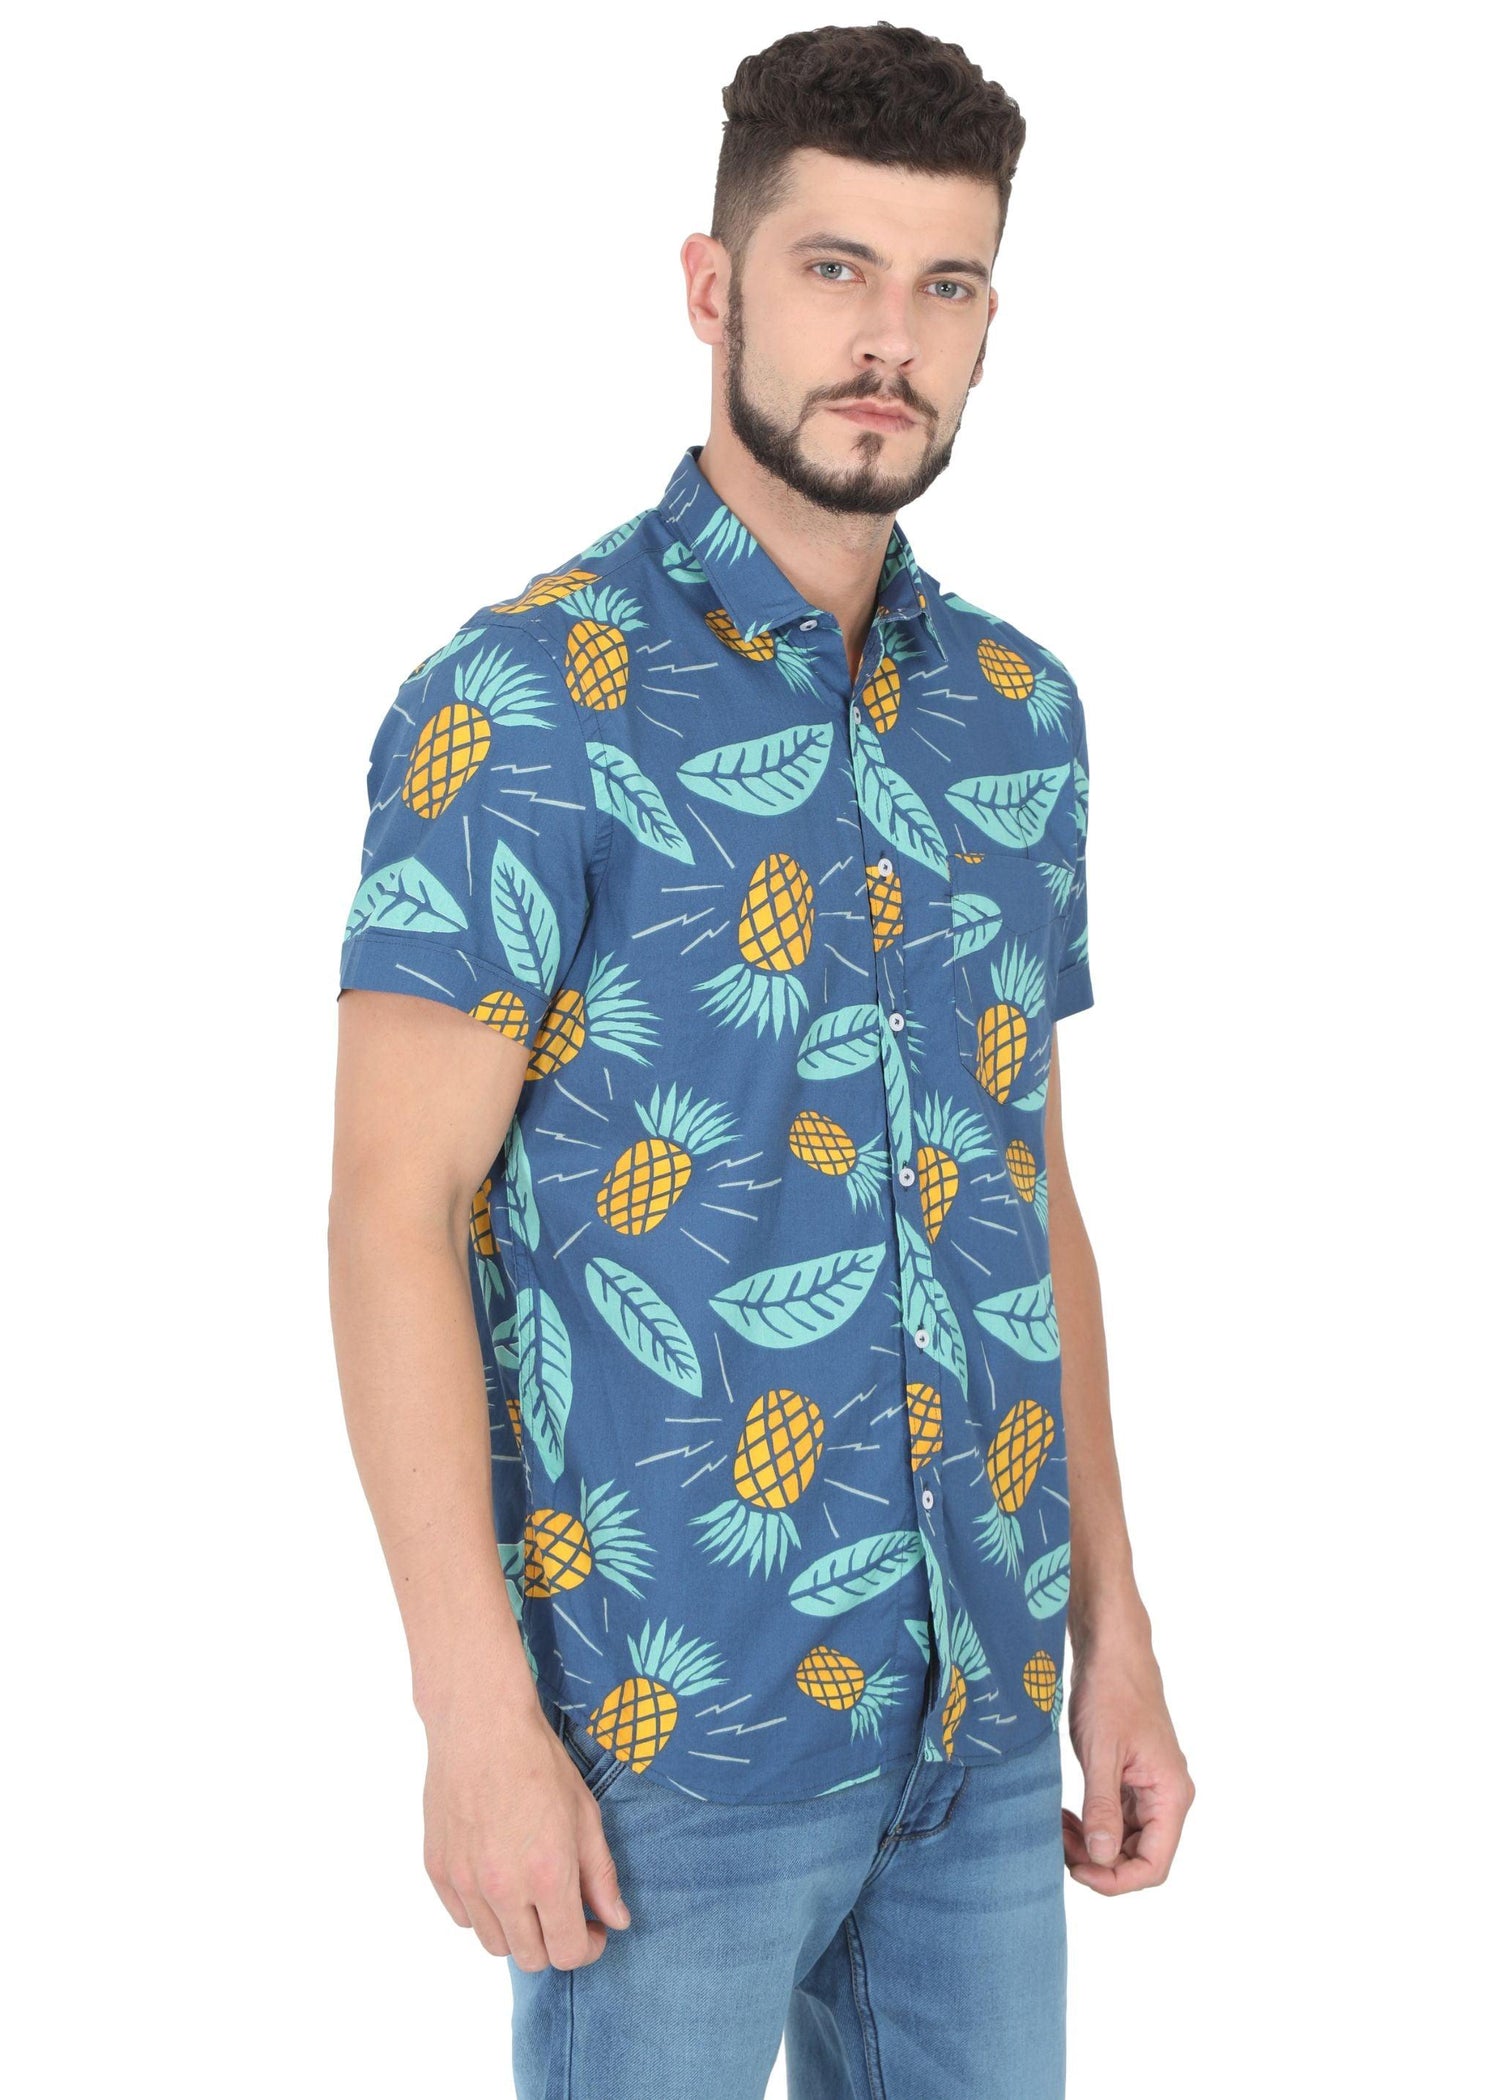 Tusok-blue-pineappleFeatured Shirt, Vacation-Printed Shirtimage-Blue Pineapple (3)